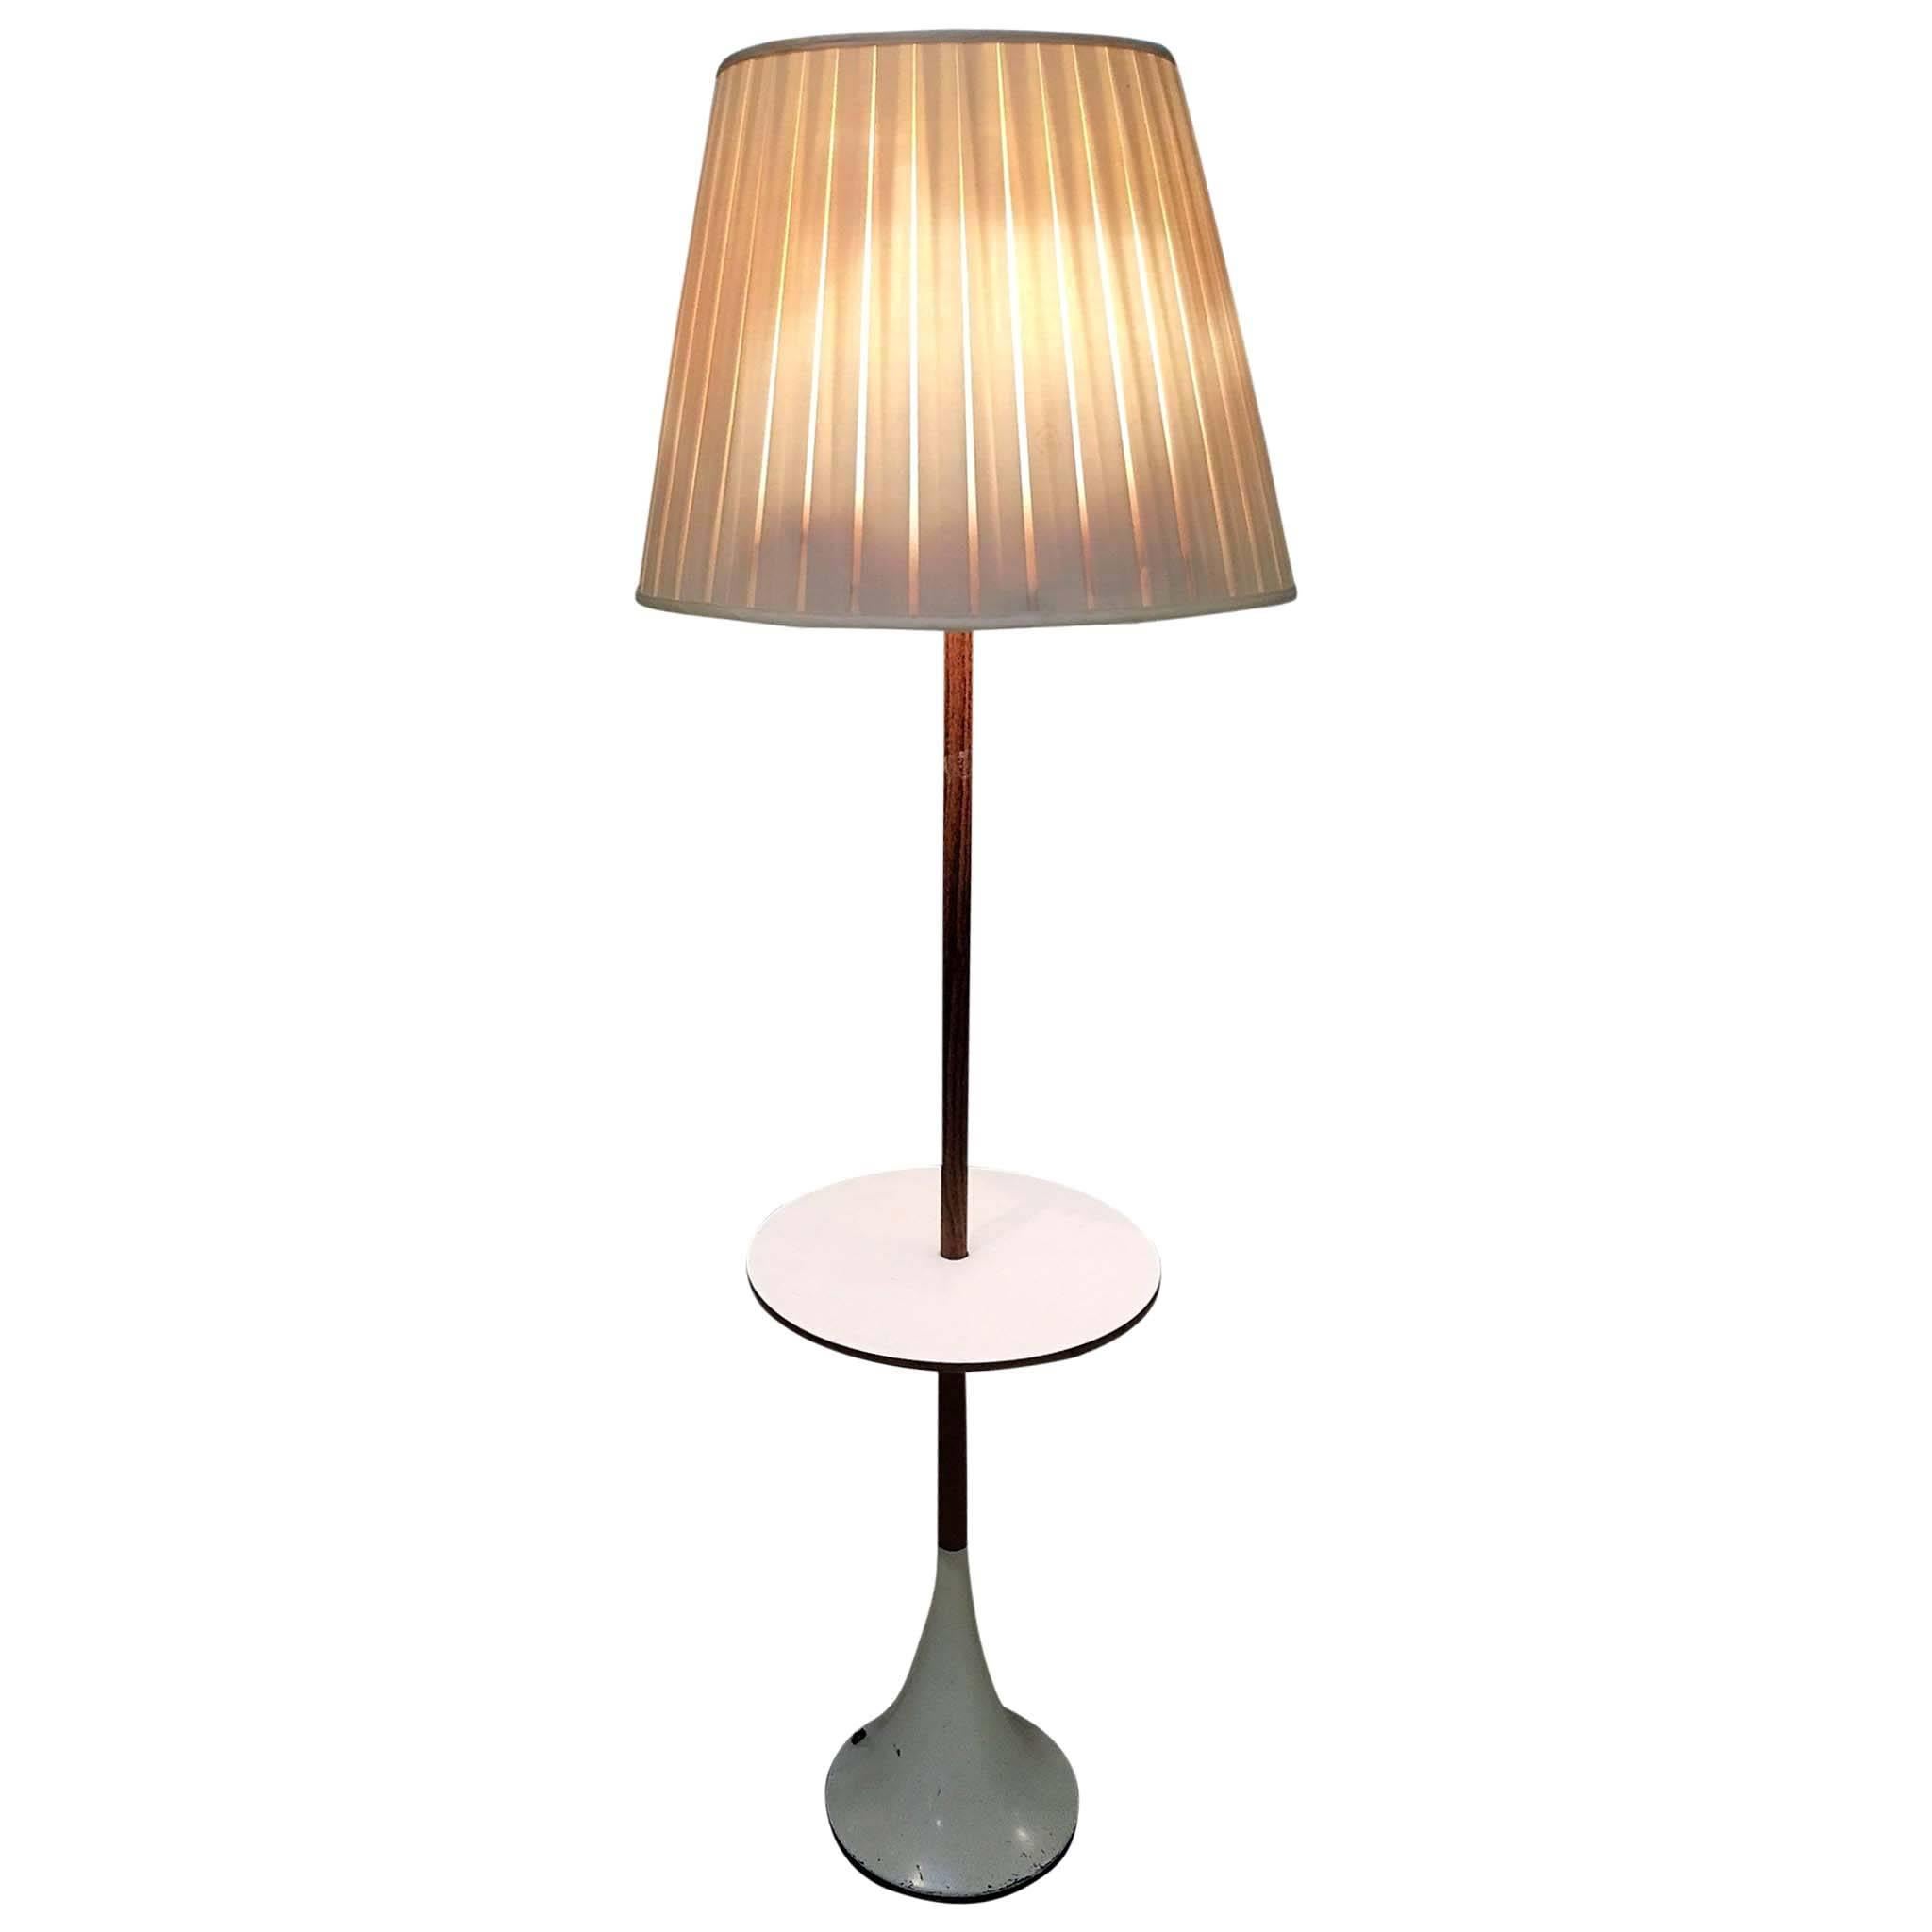 Signed Rare Laverne Mod Floor Lamp For Sale